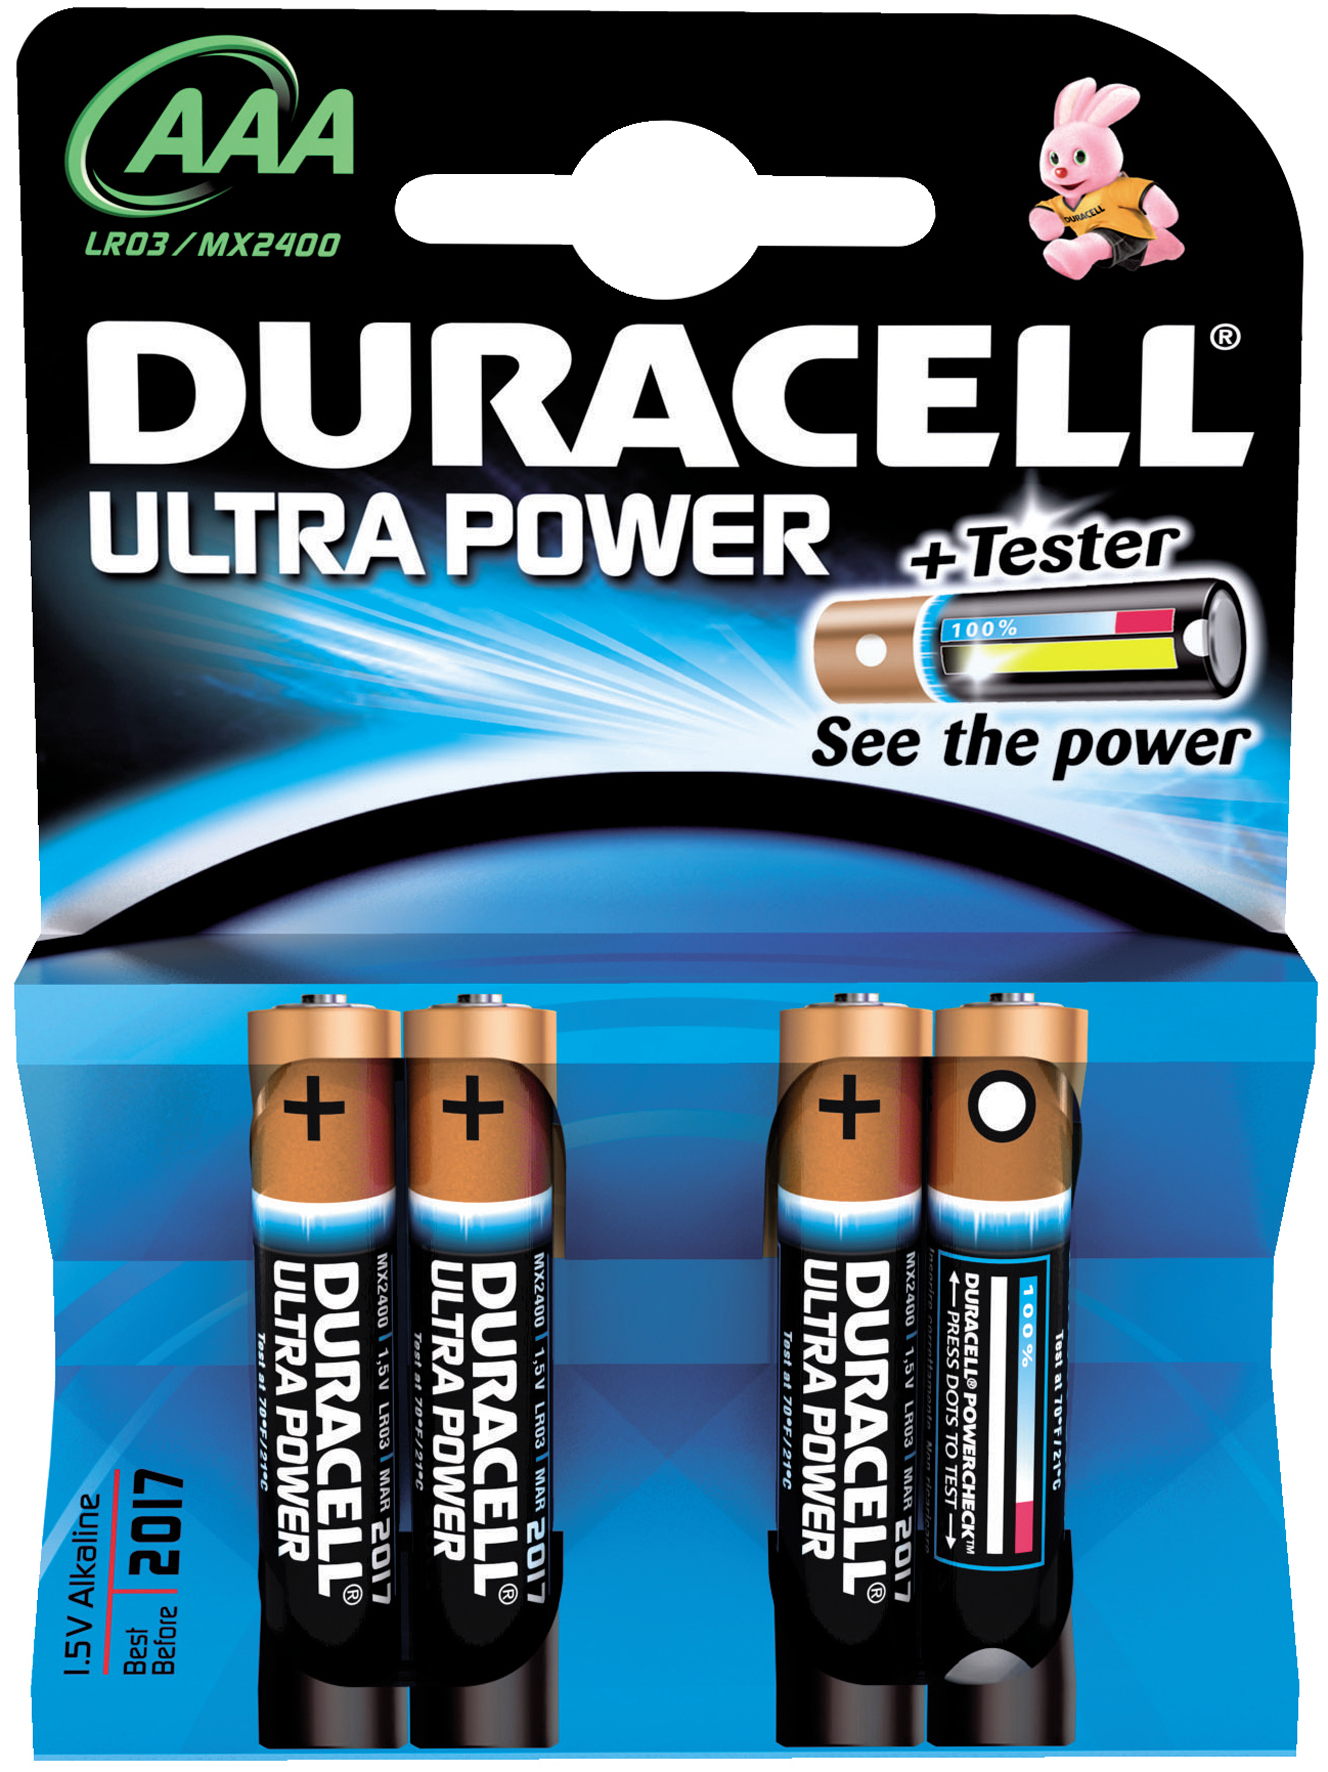 AA-batterier 4-pk, Svanenmärkta, Duracell Plus